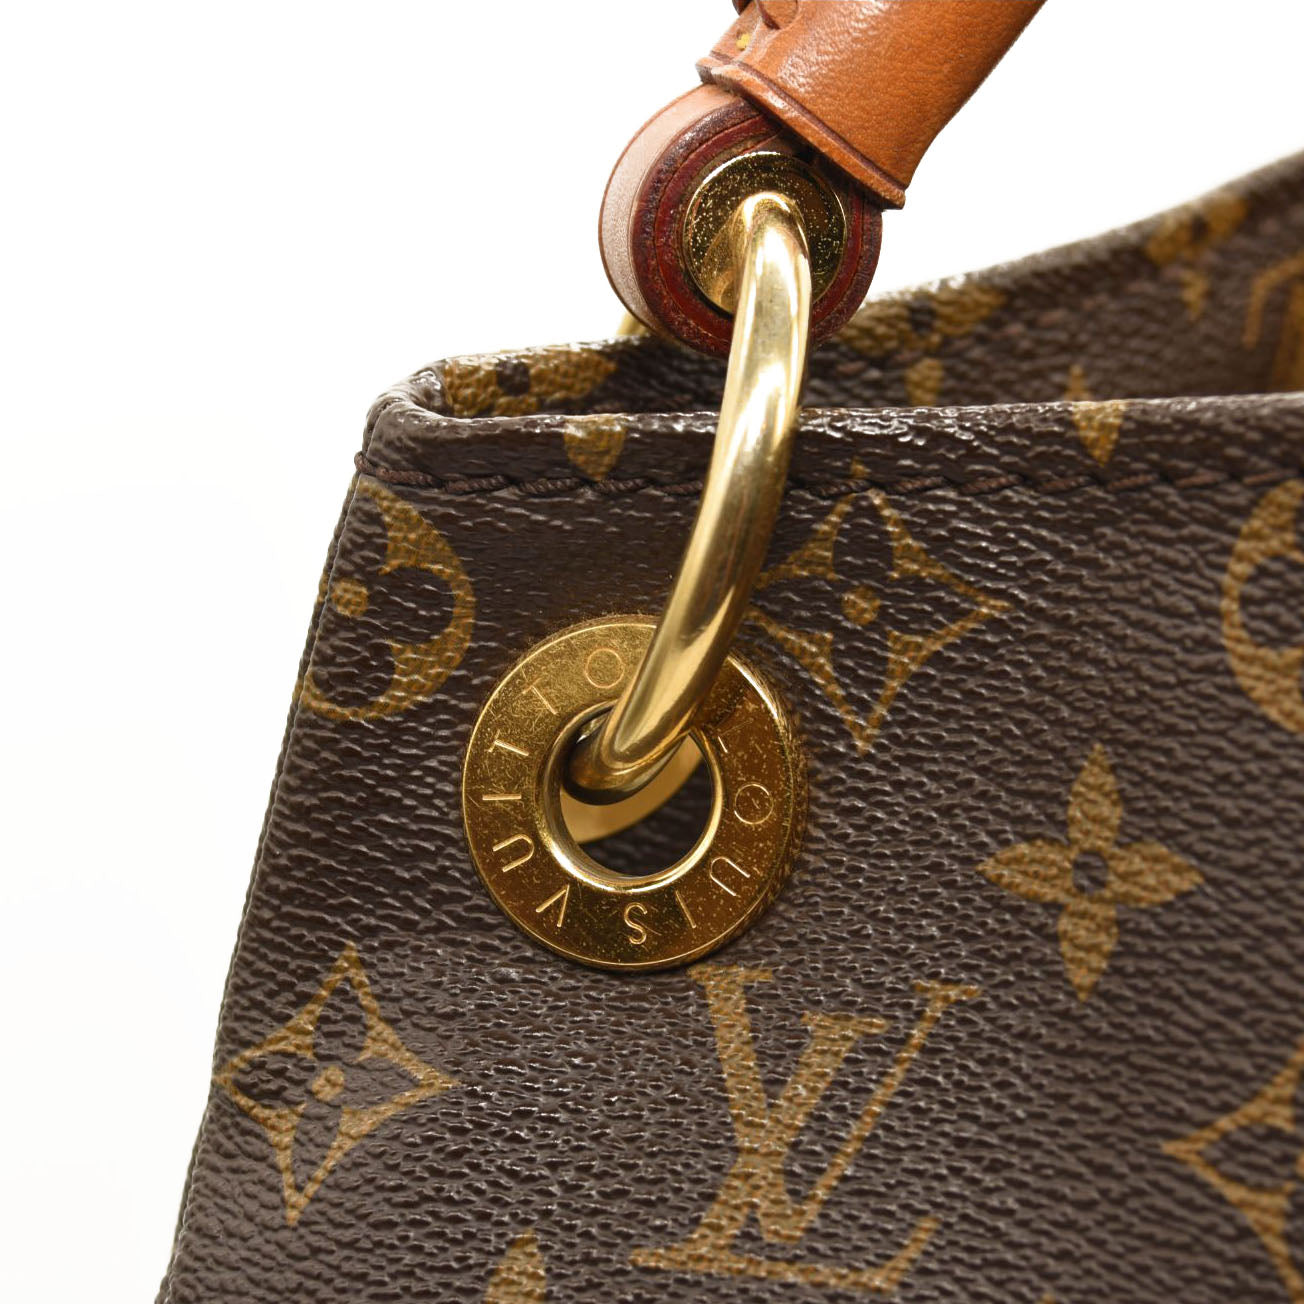 Louis Vuitton Artsy Monogram Tote Bag